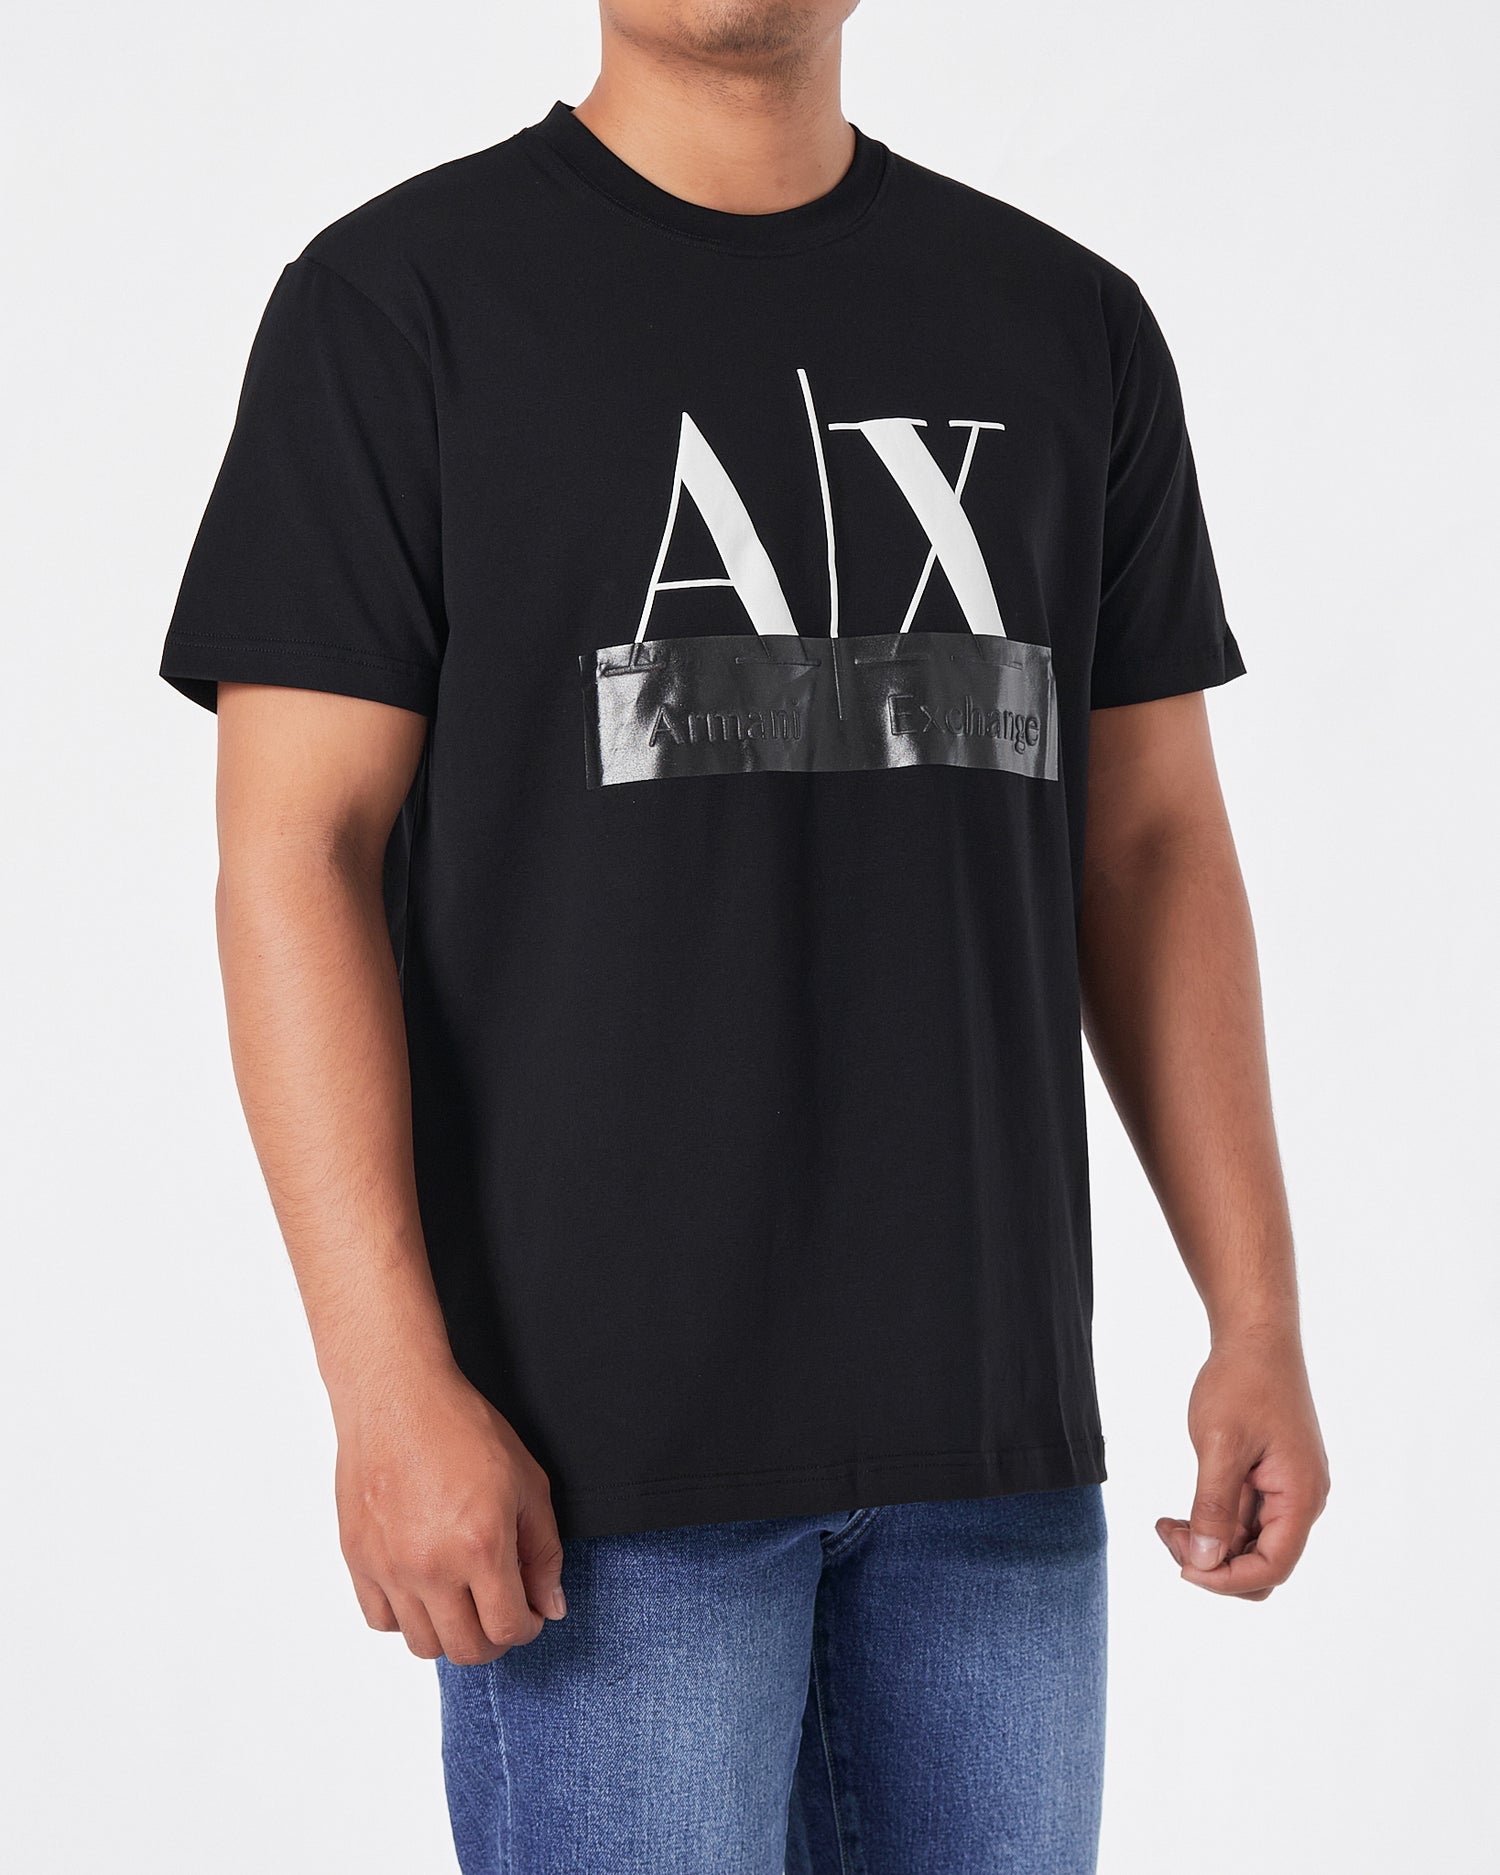 ARM AX Logo Printed Men Black T-Shirt 16.90